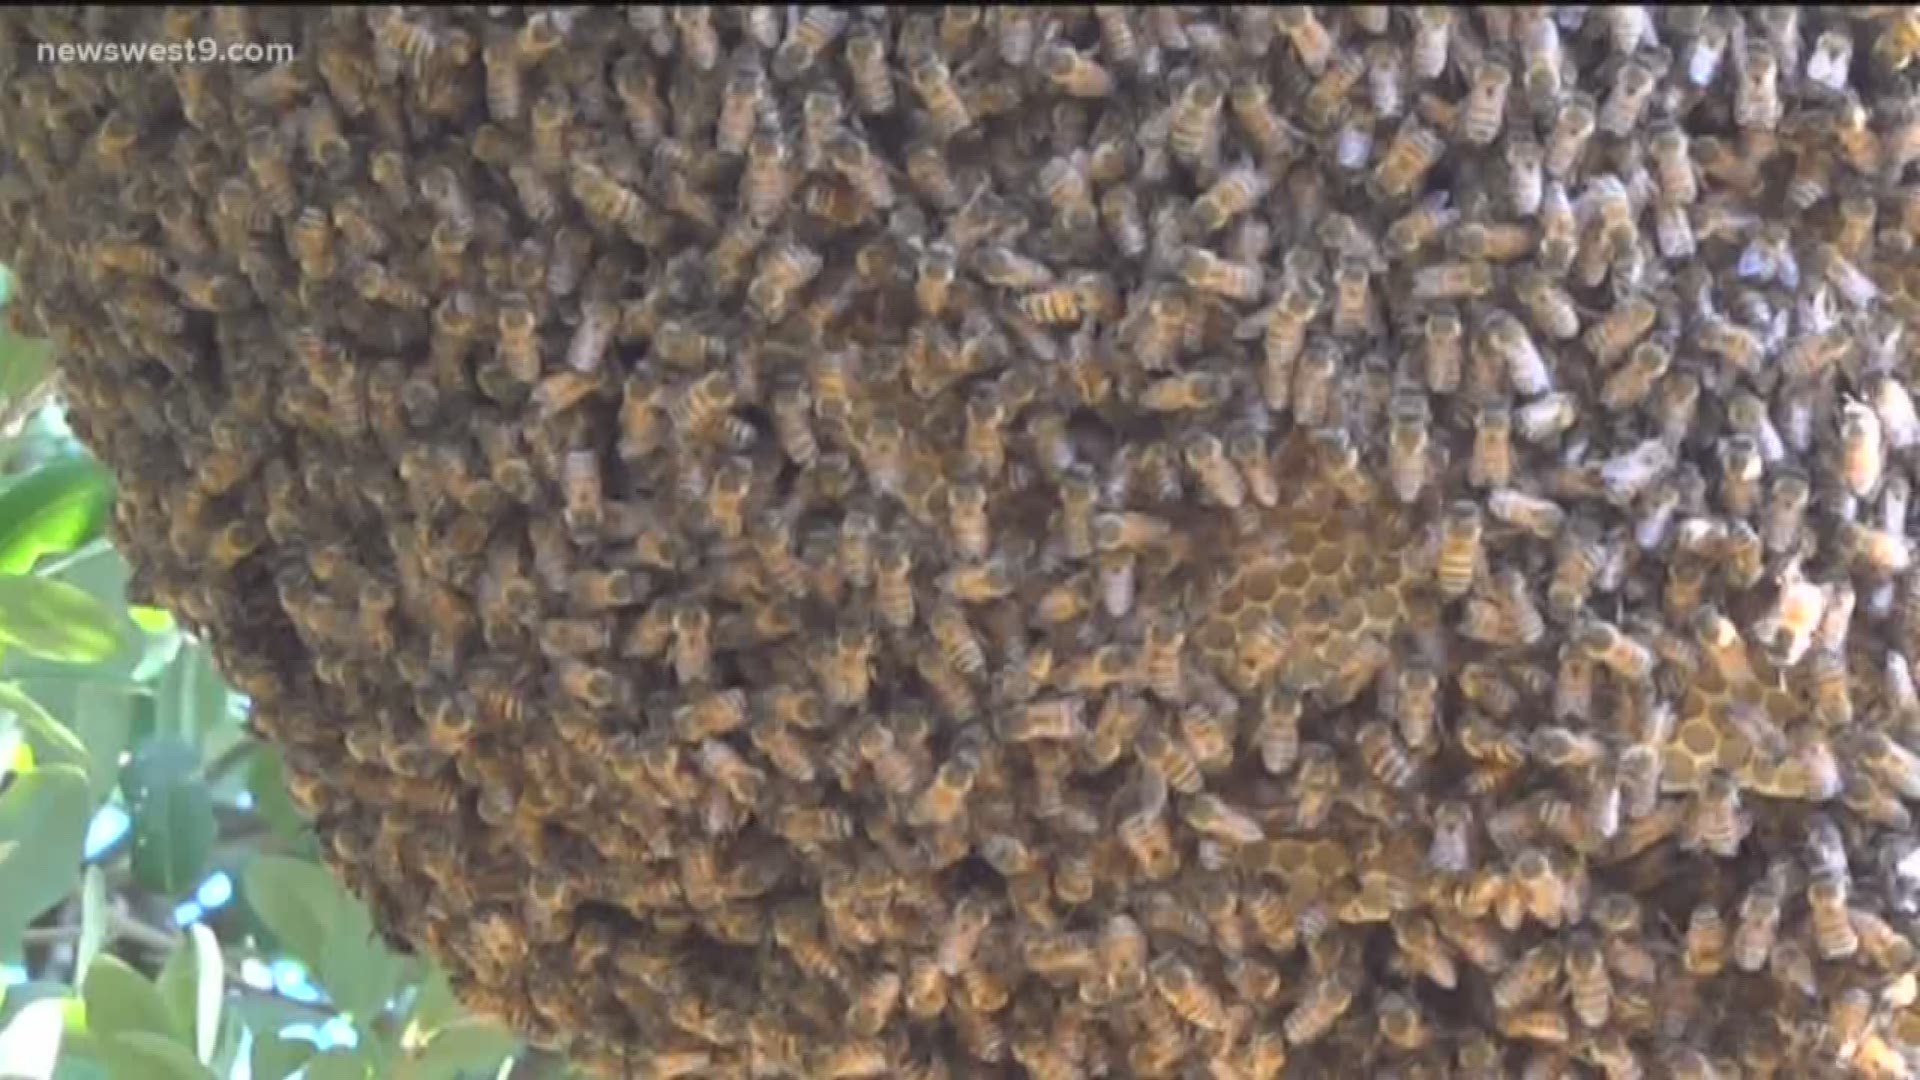 Beekeepers estimate the beehive weighs around 90 lbs.